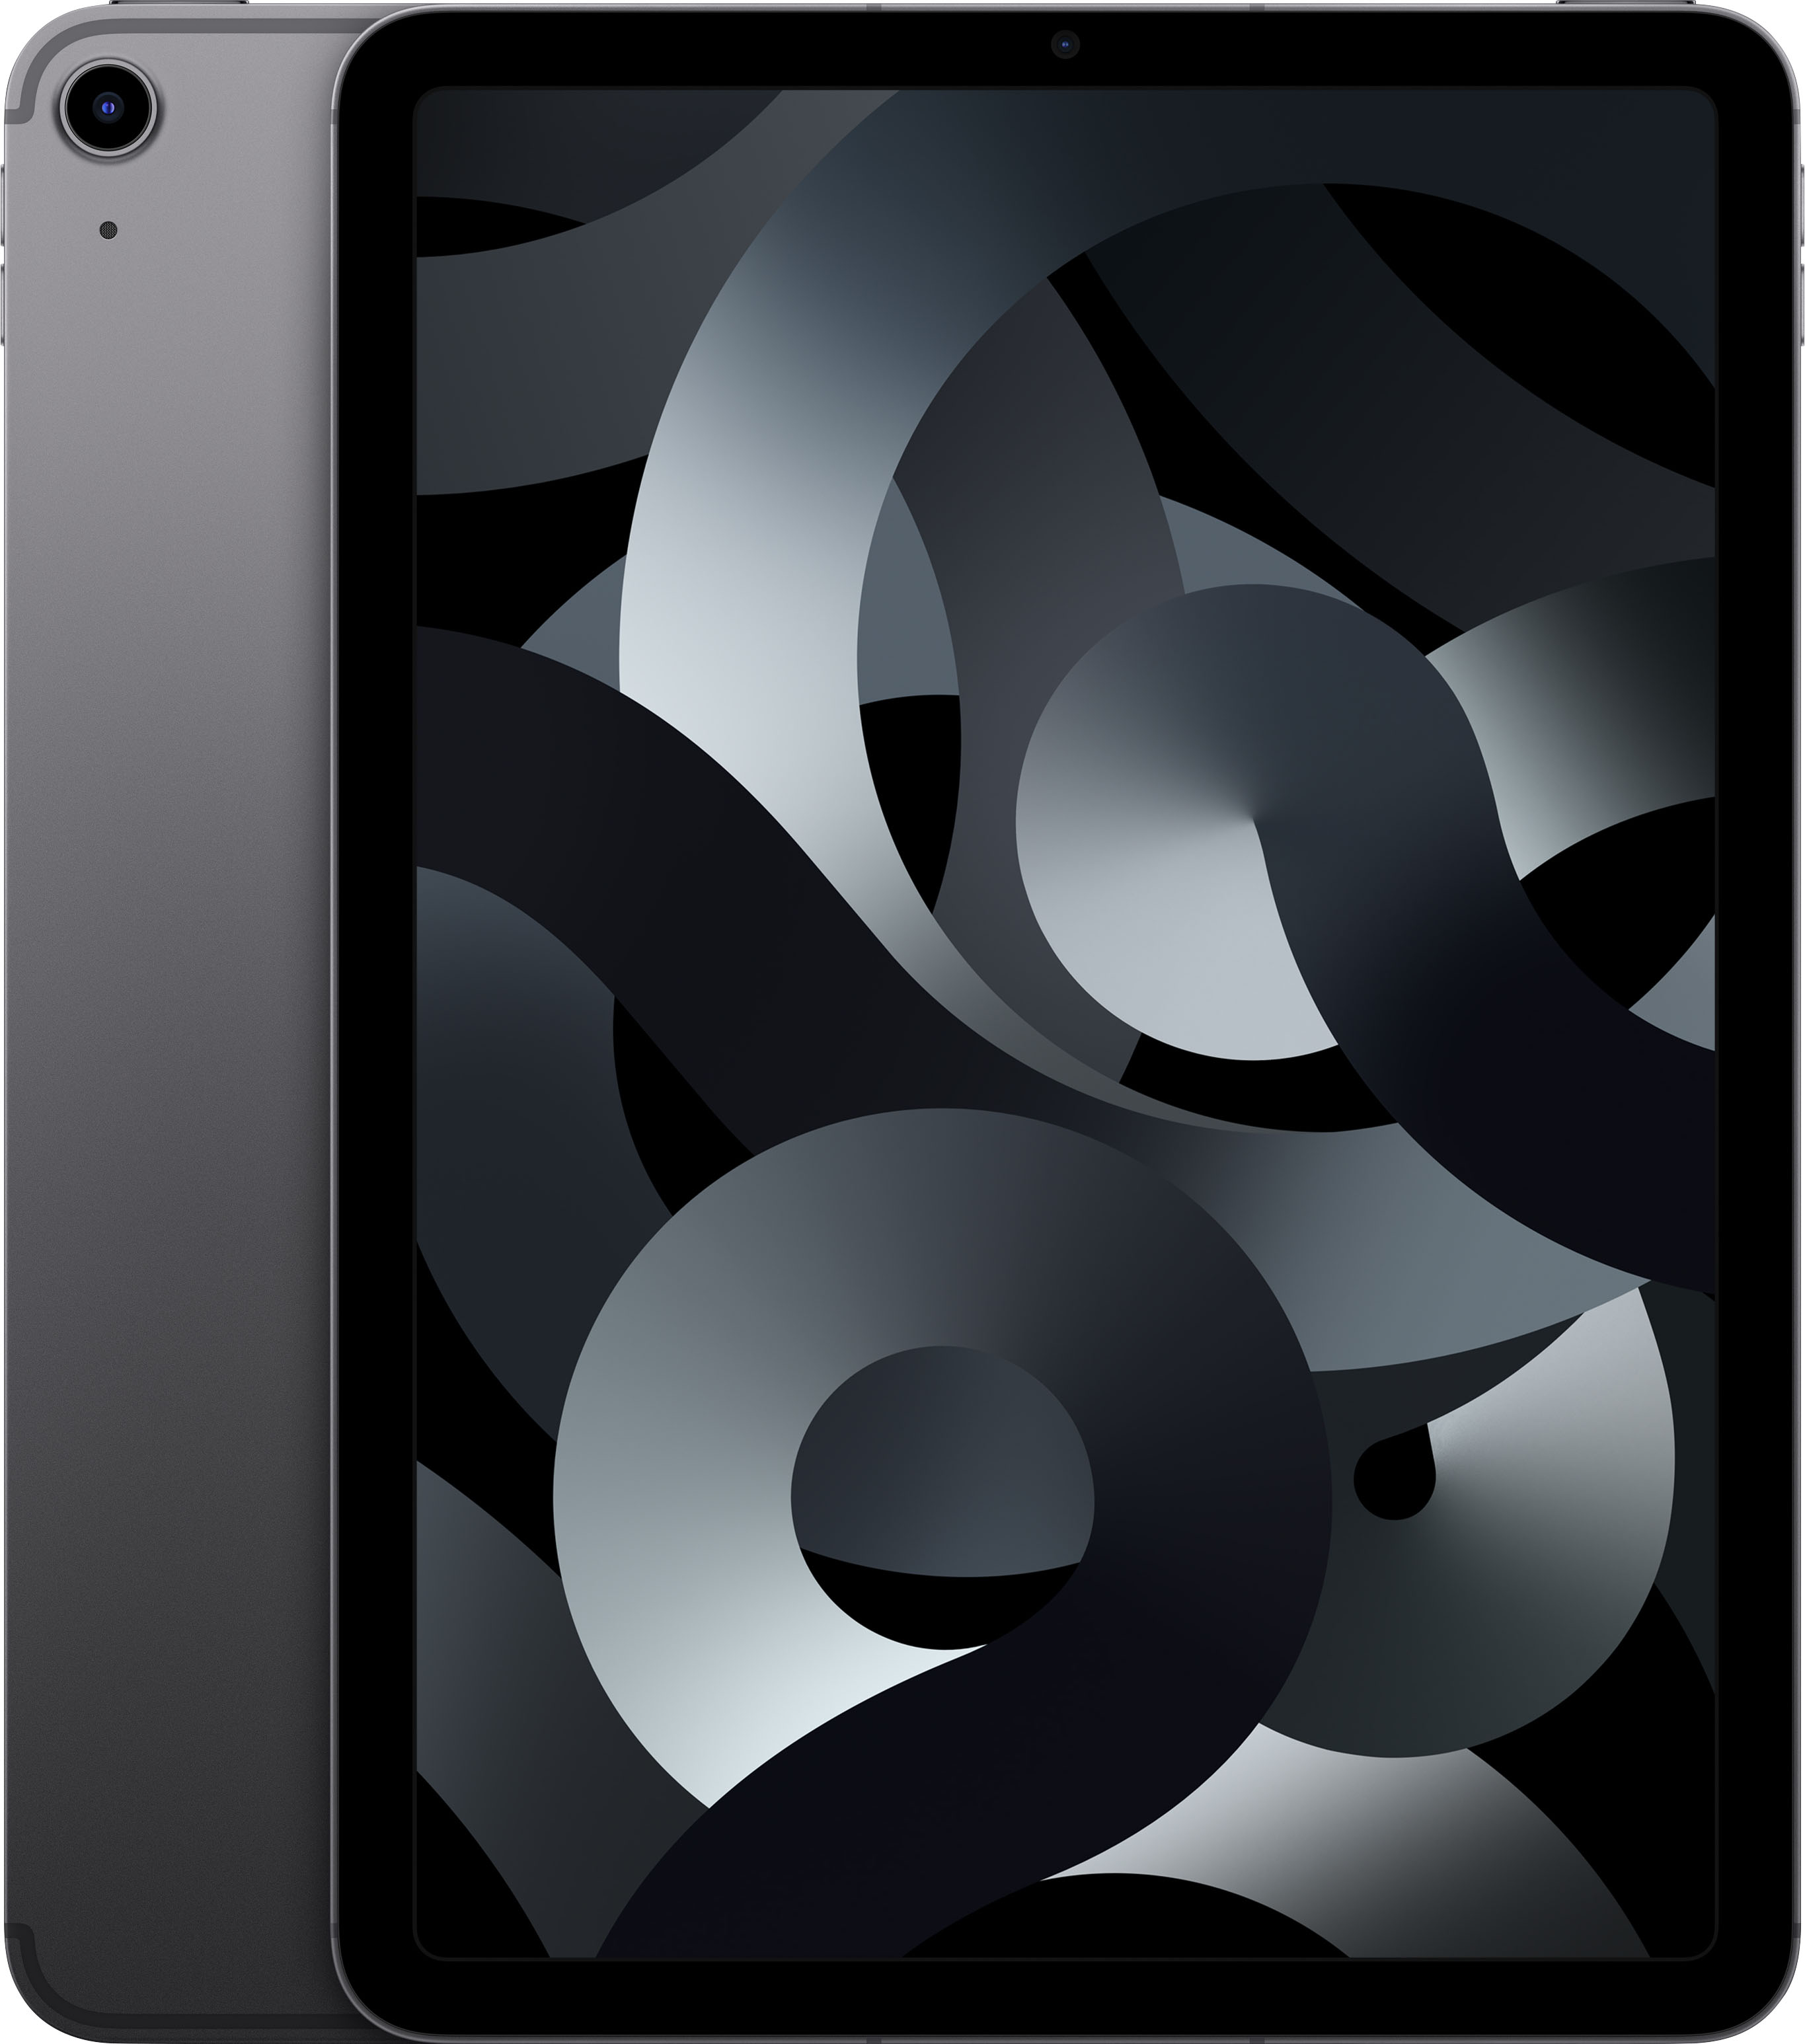 APPLE iPad Air Wi-Fi + Cellular 64GB - Rose Gold Grey - Tablette